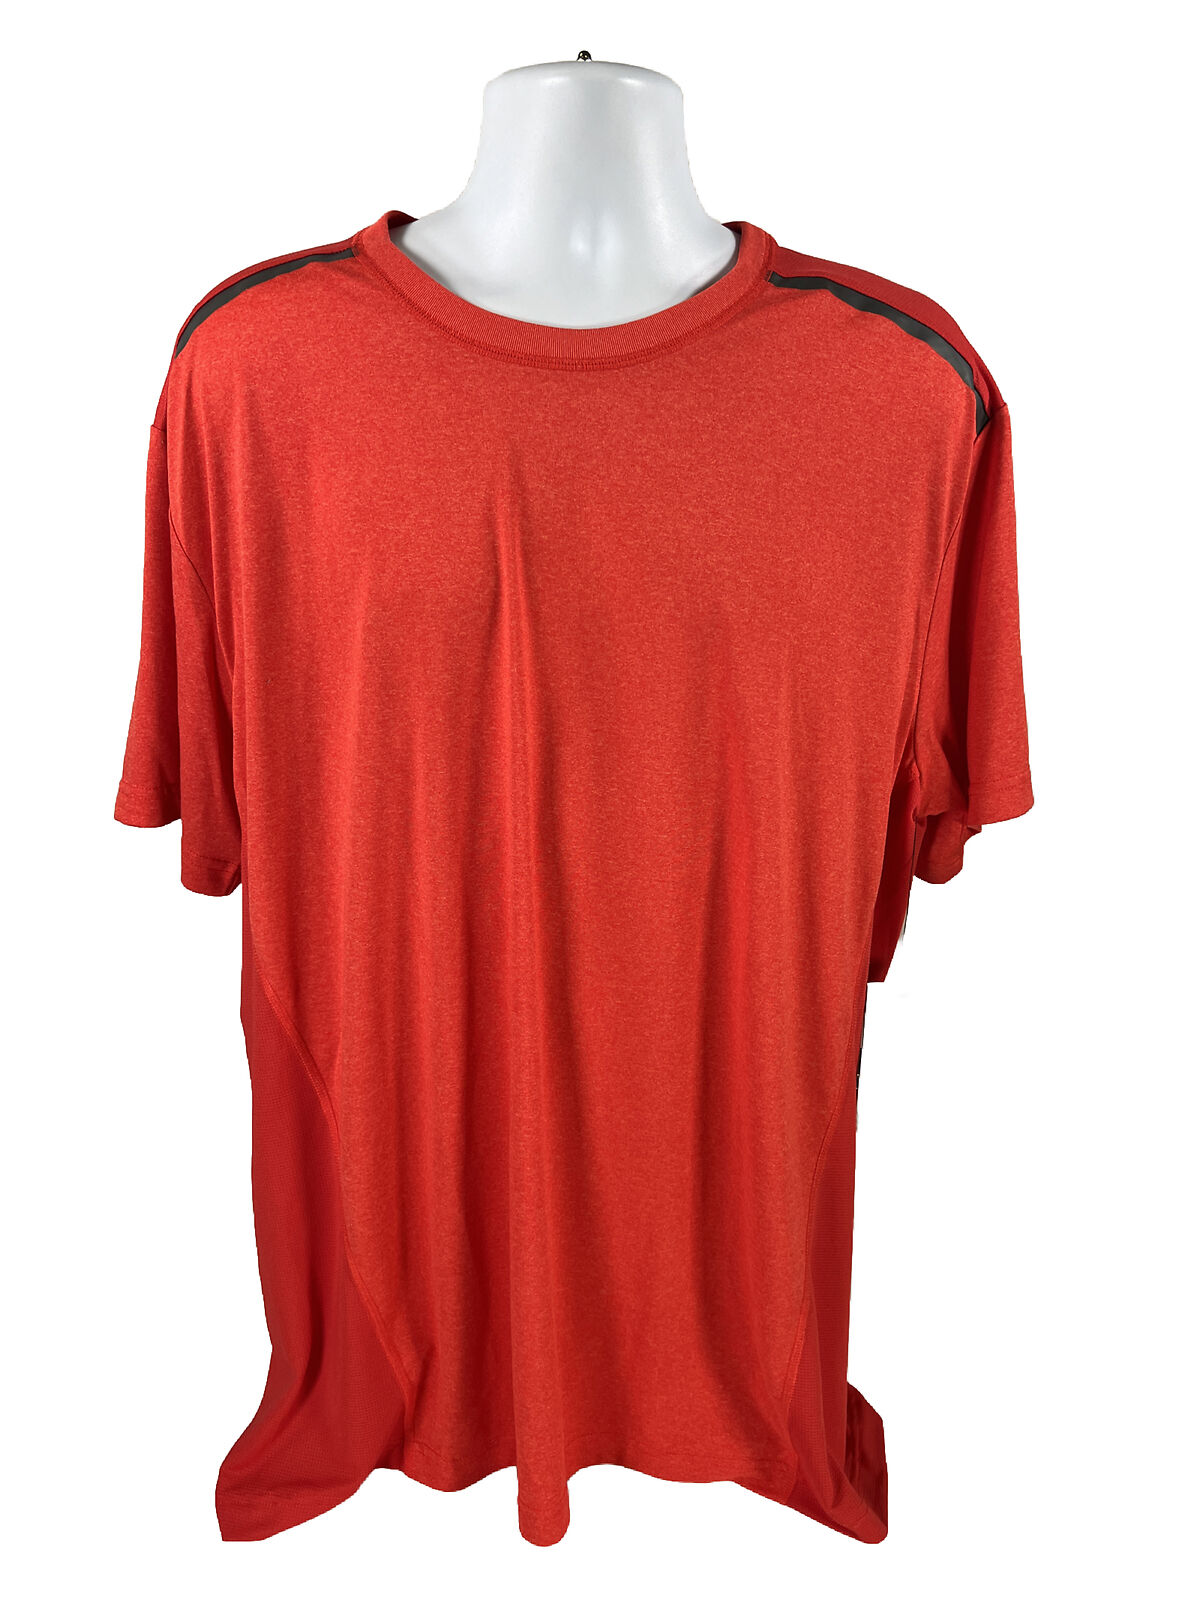 NUEVA camiseta deportiva de manga corta roja MSX Michael Strahan para hombre - Tall XLT